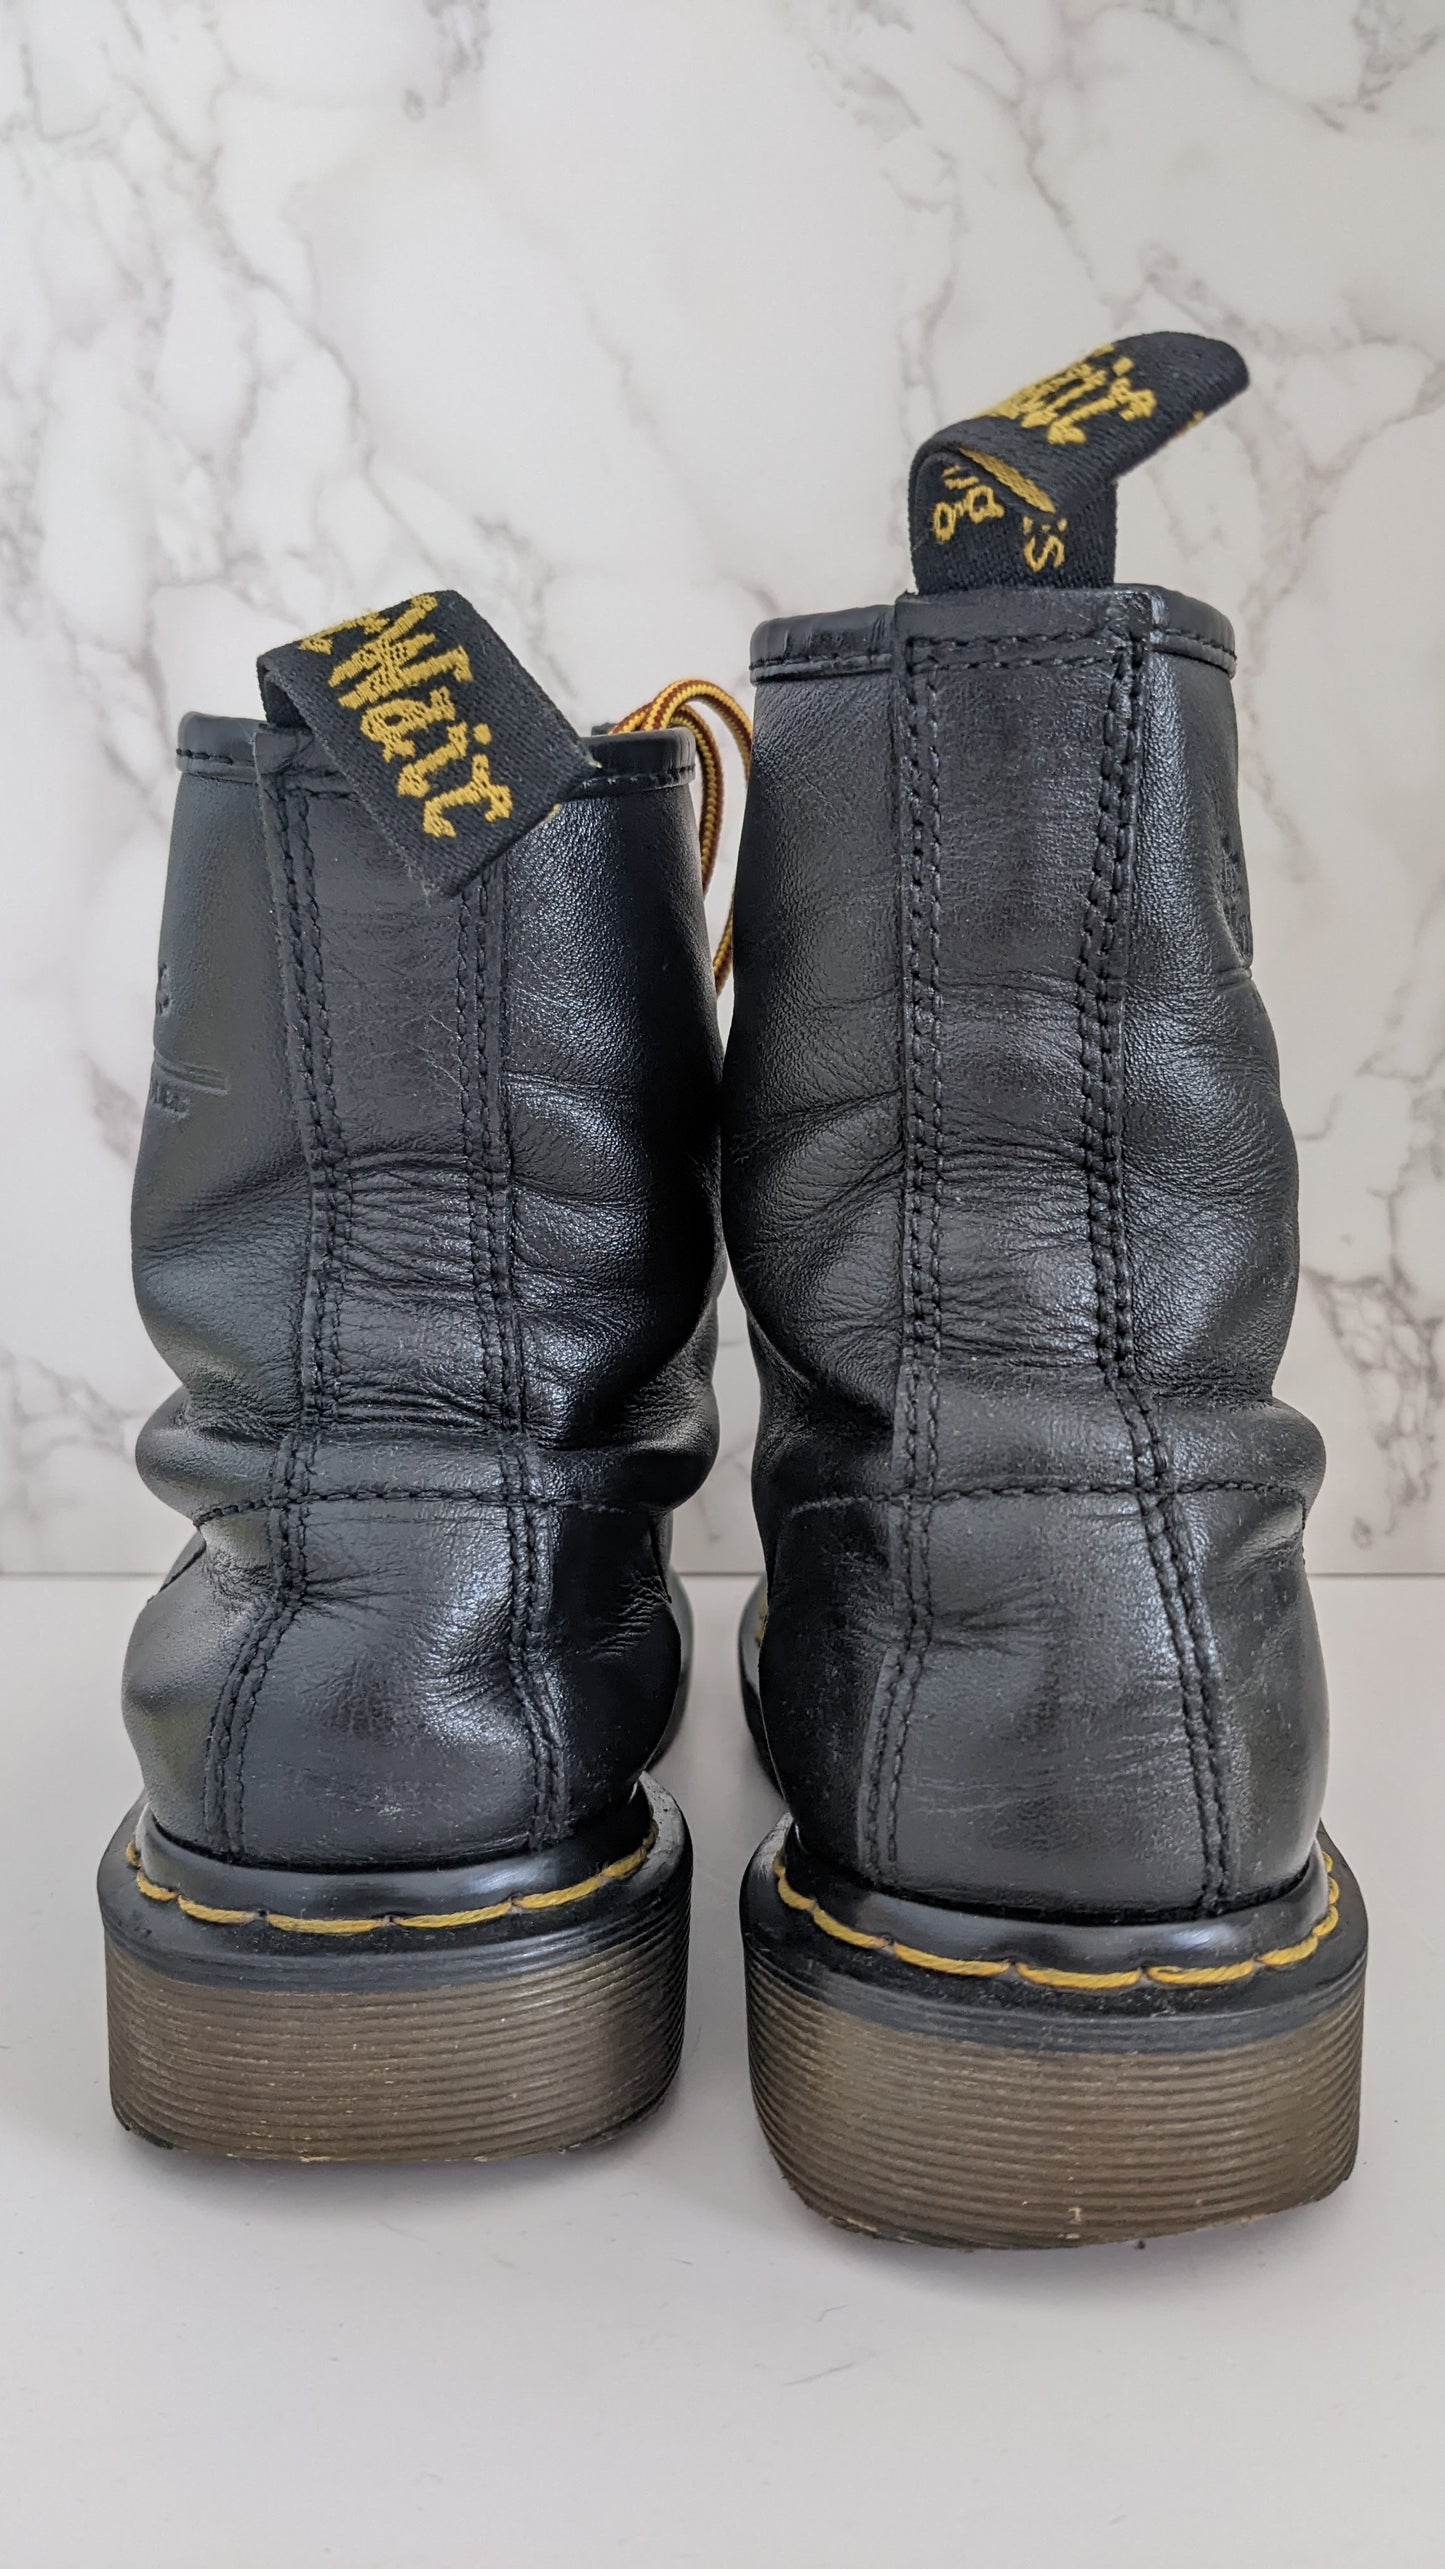 Dr. Martens 1460 Smooth Leather Black US Size 8